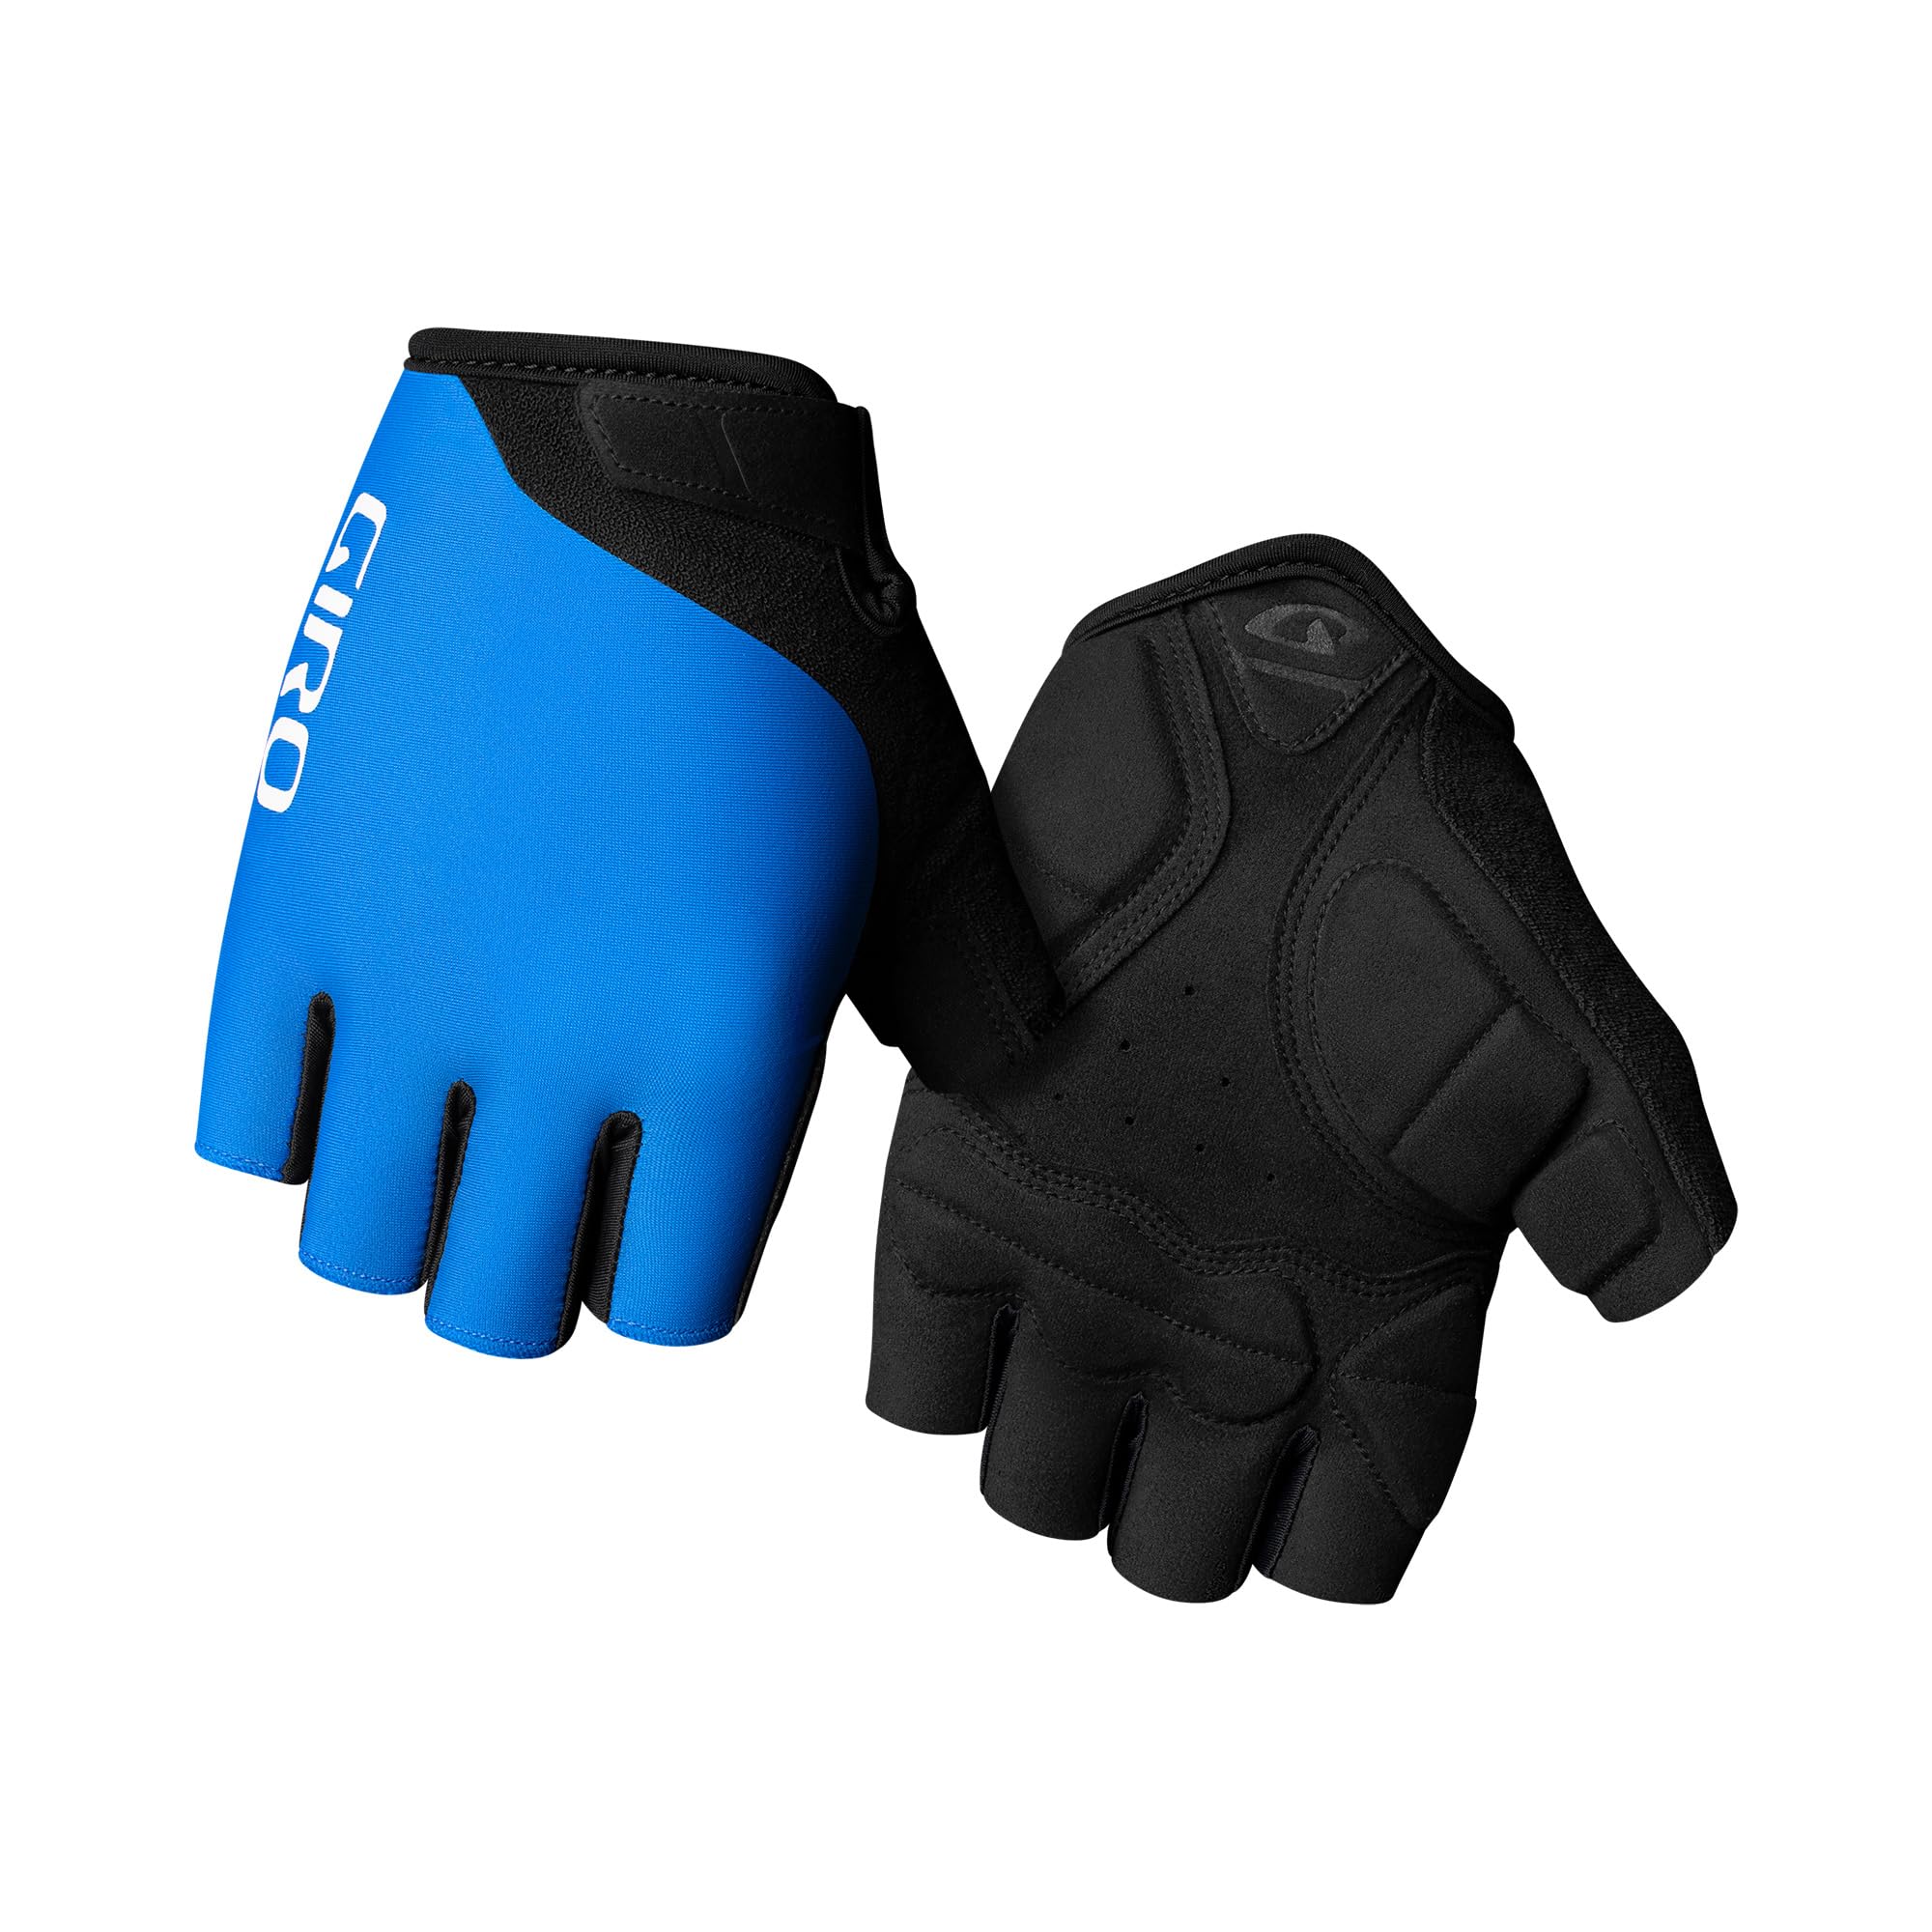 Giro Jag Road Cycling Gloves - Men's  - Like New